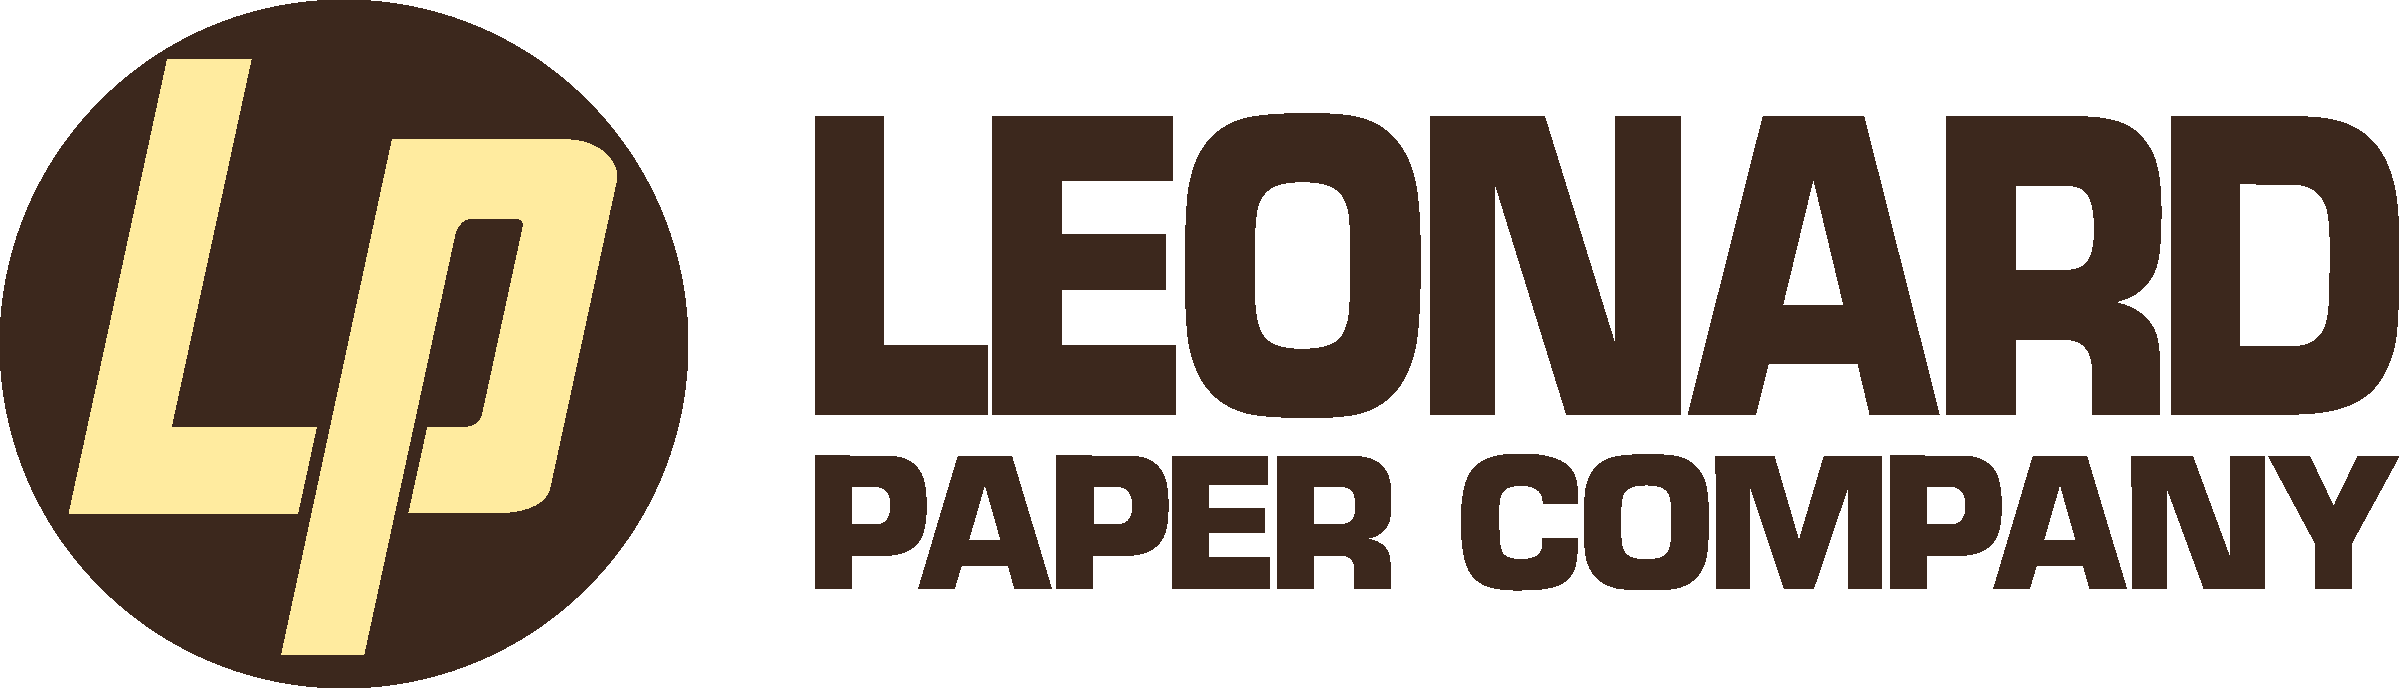 Paper Company. Paper companies